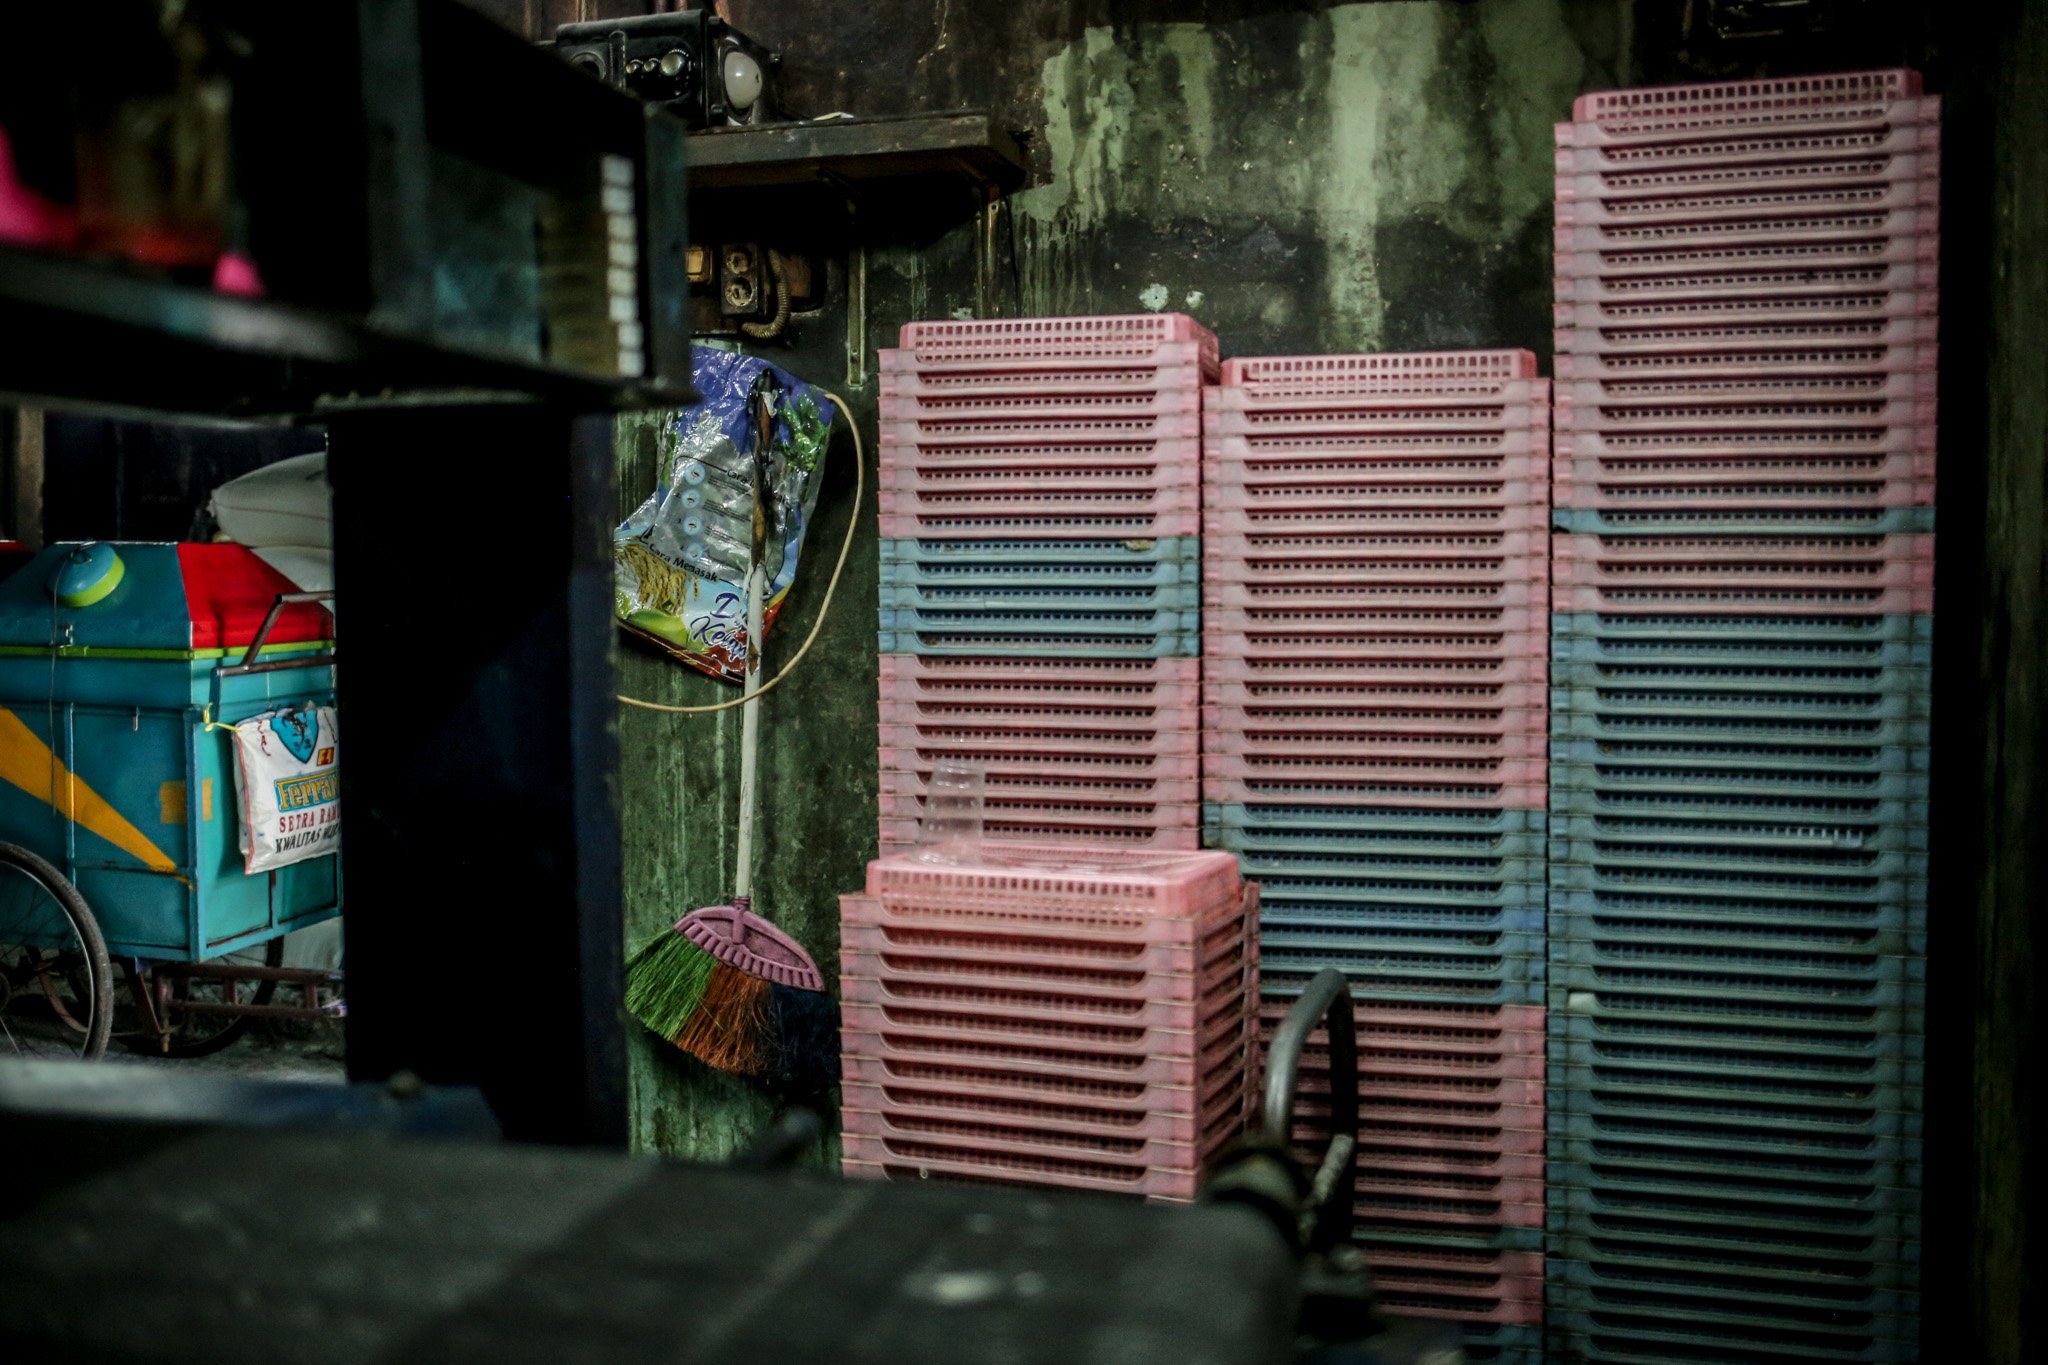 Sejumlah rak disusun di sudut ruangan di rumah produksi kerupuk Melati, Menteng Atas, Jakarta Selatan, Jumat, (23/7/2021). Semenjak penerapan Pemberlakuan Pembatasan Kegiatan Masyarakat (PPKM) Darurat rumah produksi kerupuk yang sudah berdiri sejak tahun 1960 ini alami penurunan omzet hingga 40%.